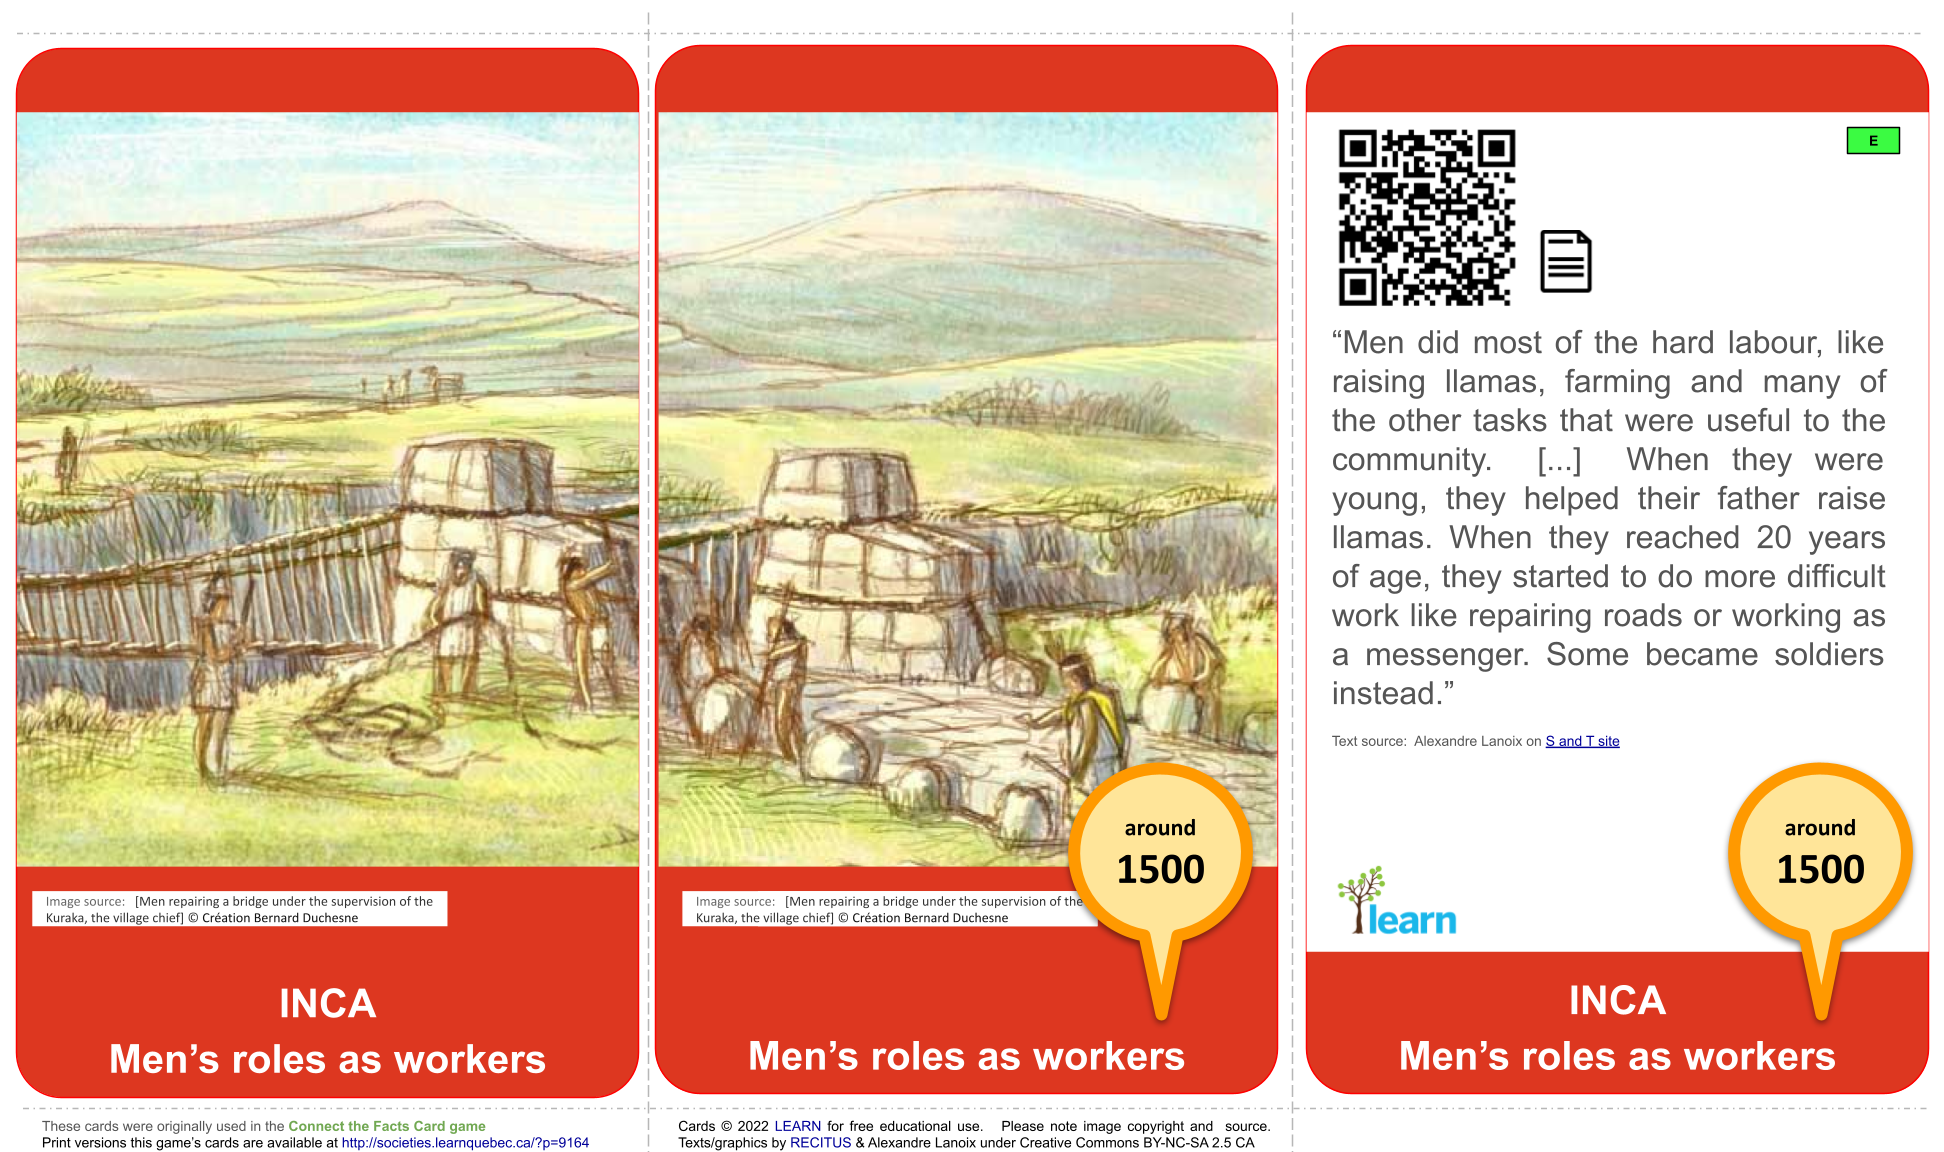 Inca: Men role as workers